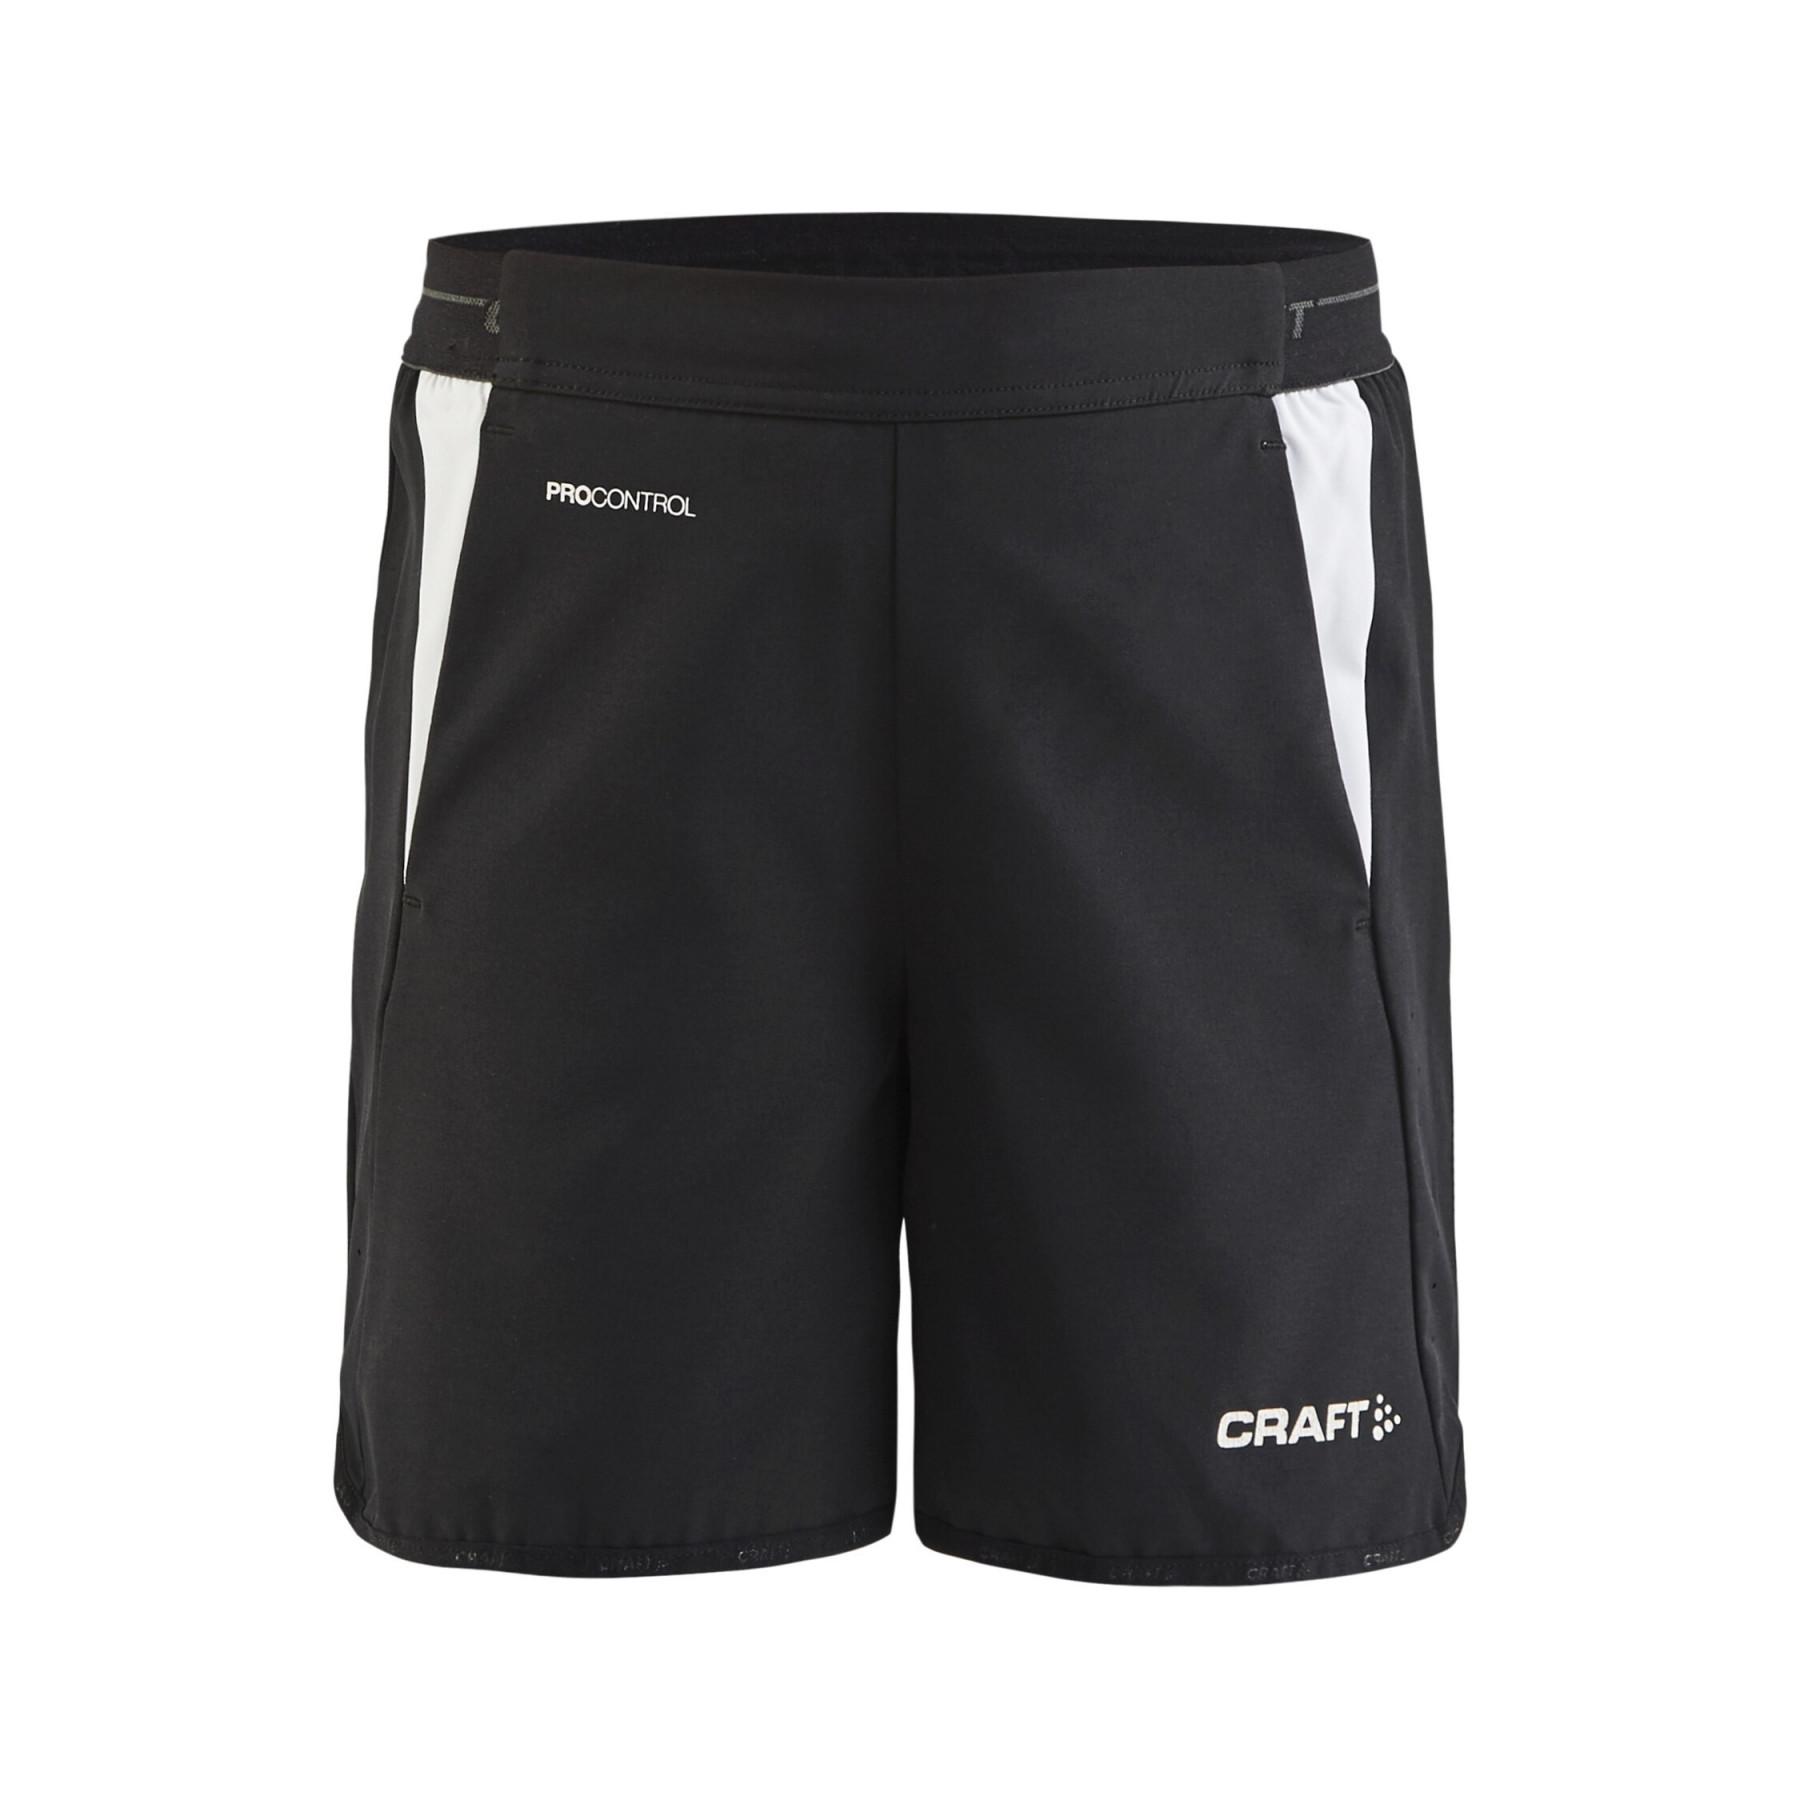 Children's shorts Craft pro control impact